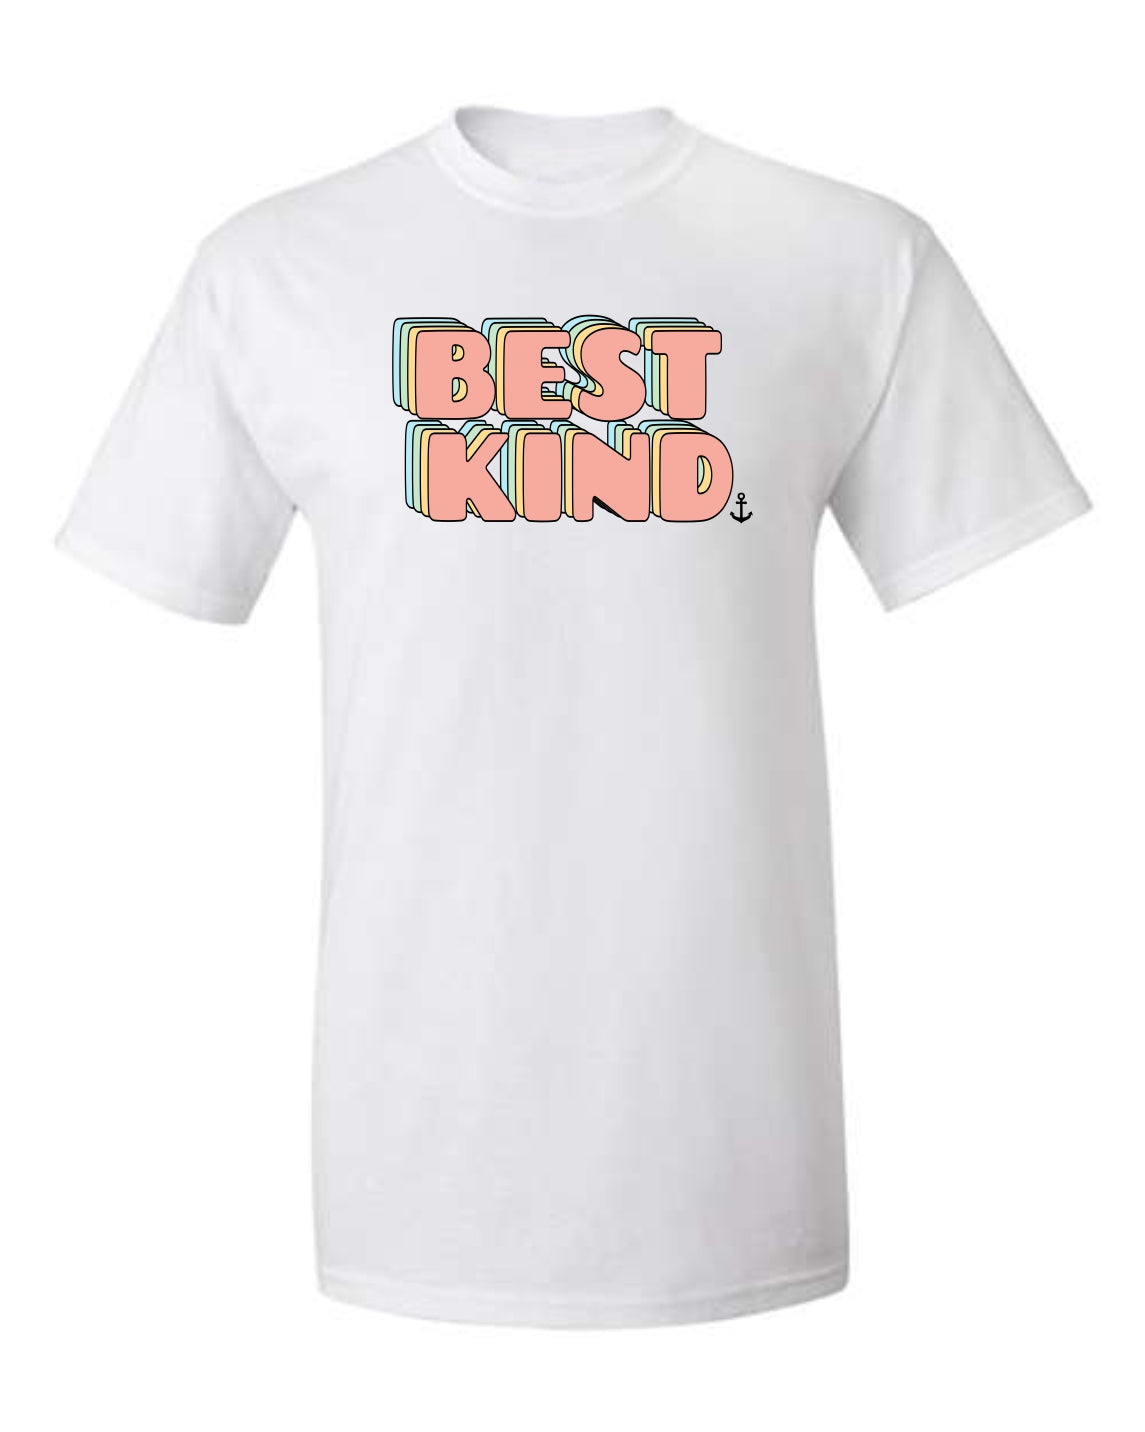 "Best Kind" Groovy T-Shirt